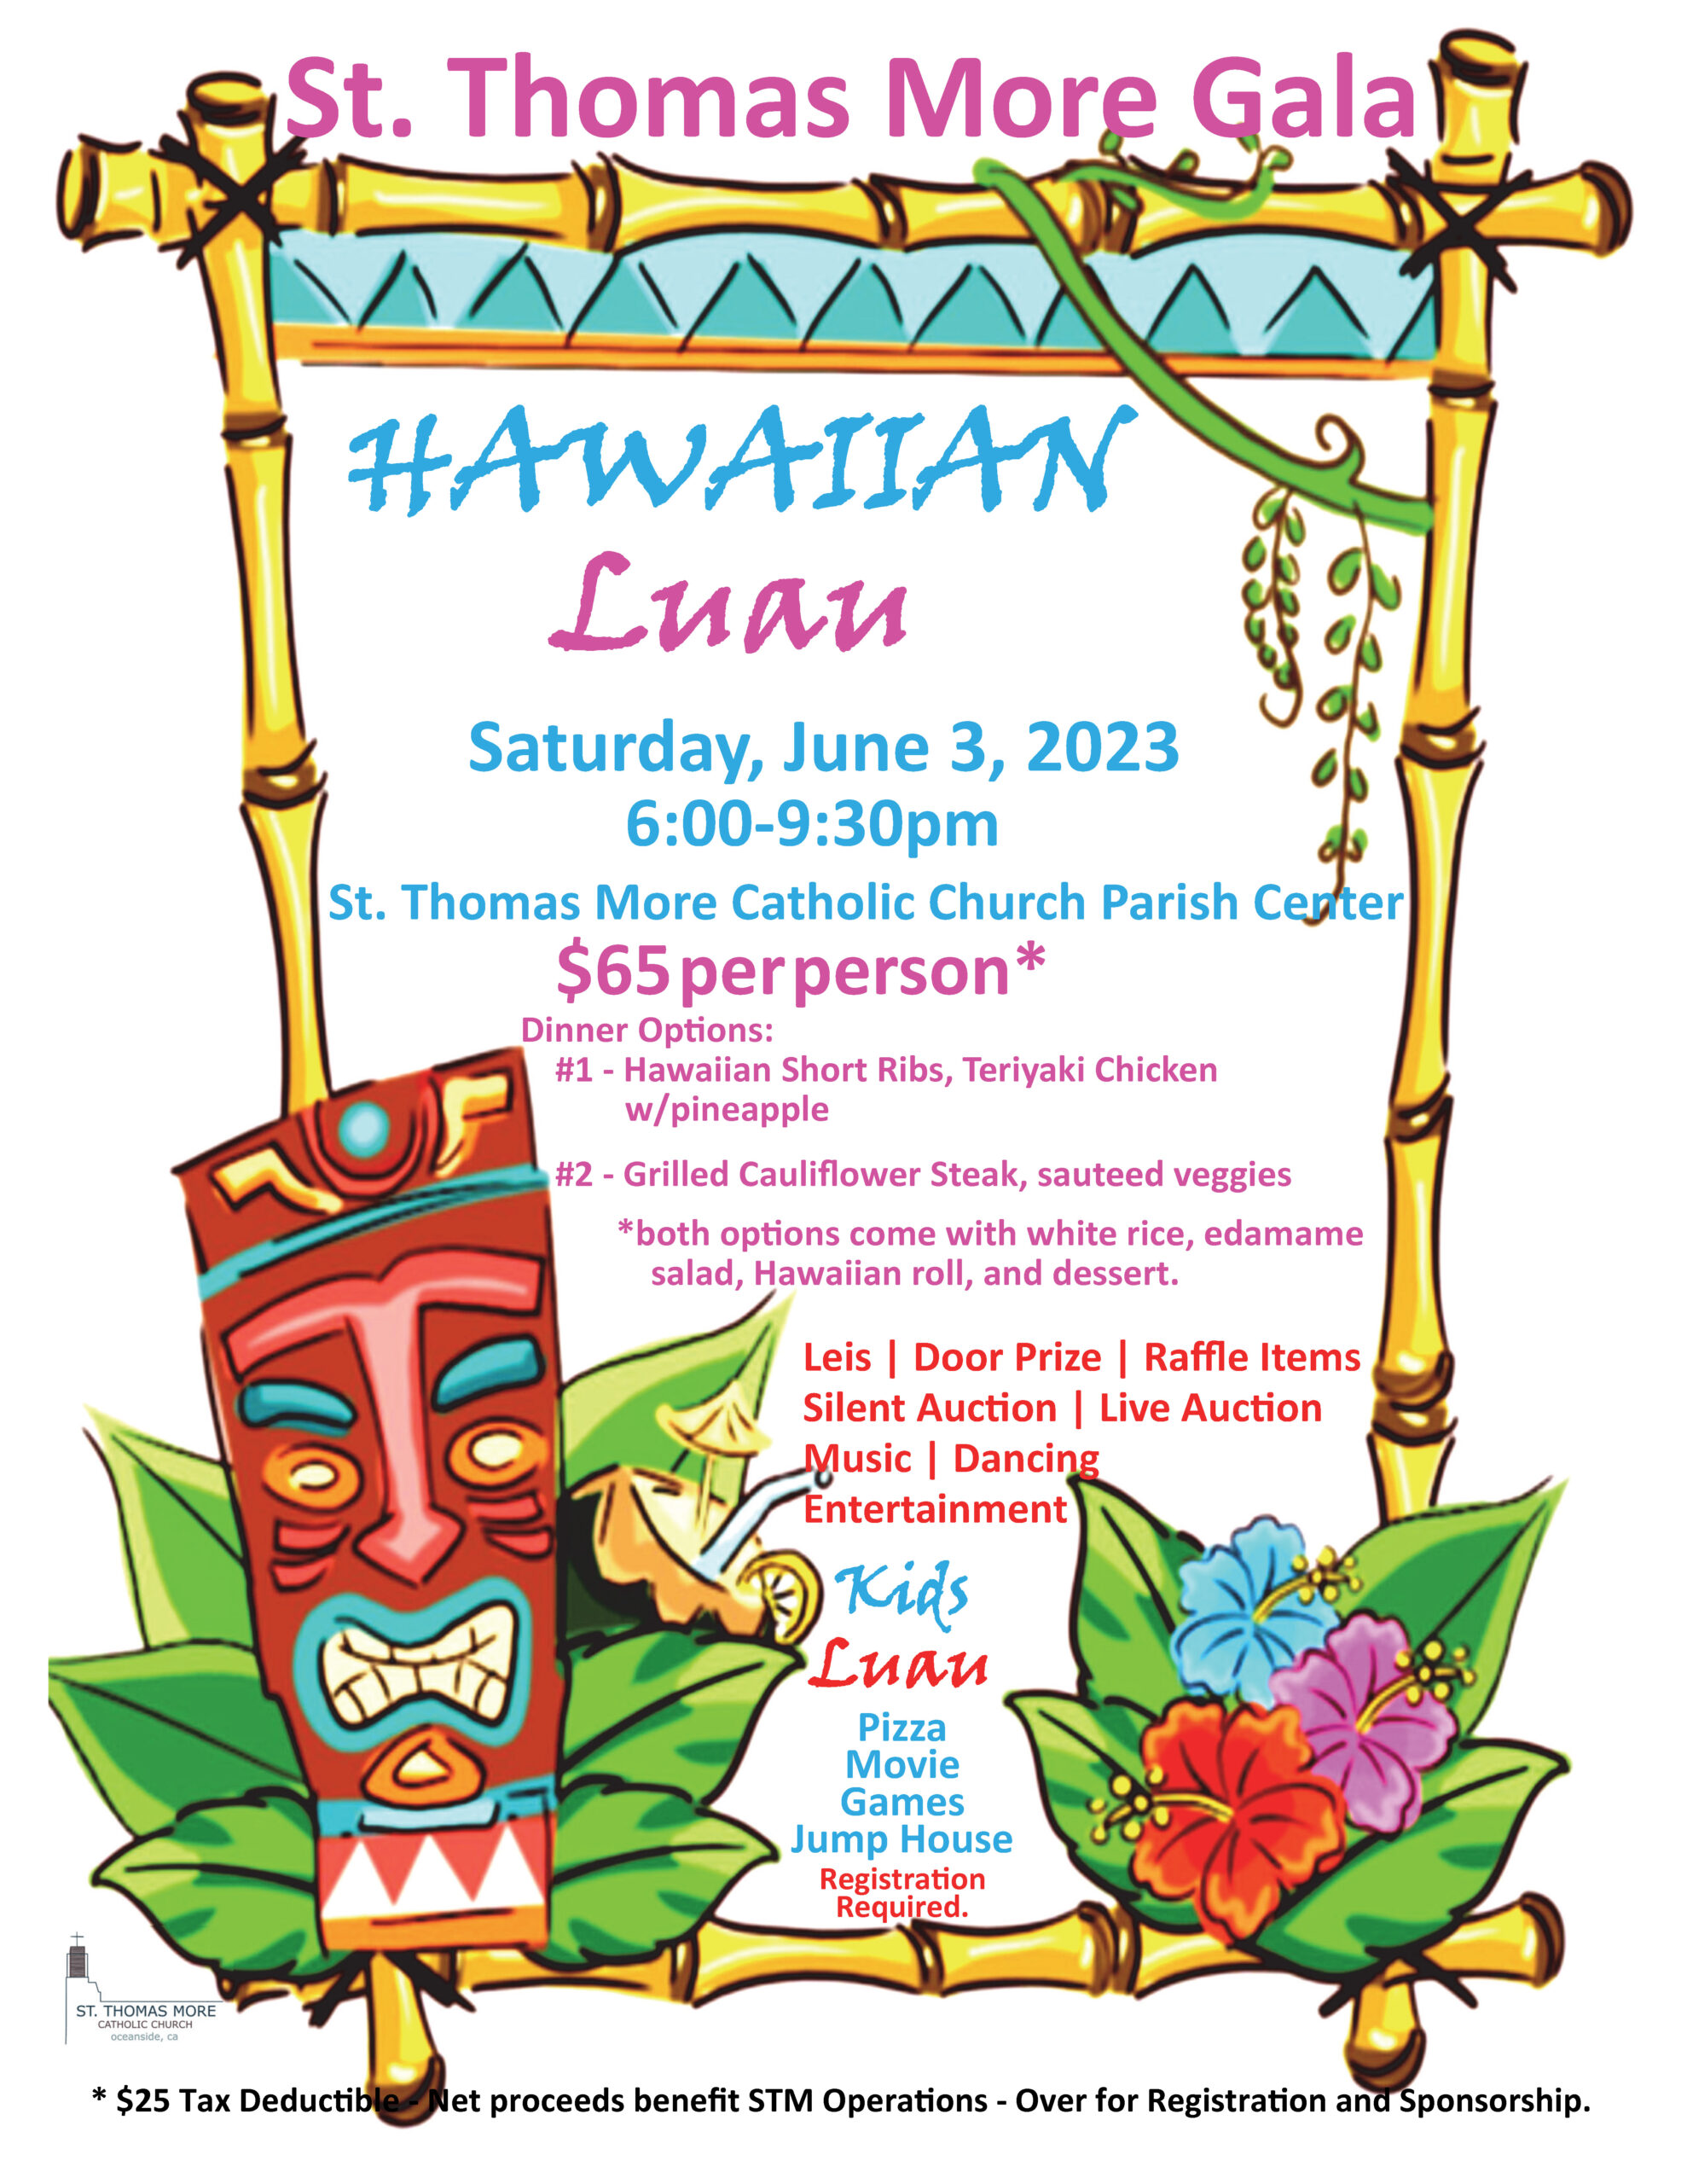 STM Gala: Hawaiian Luau, Saturday, June 3